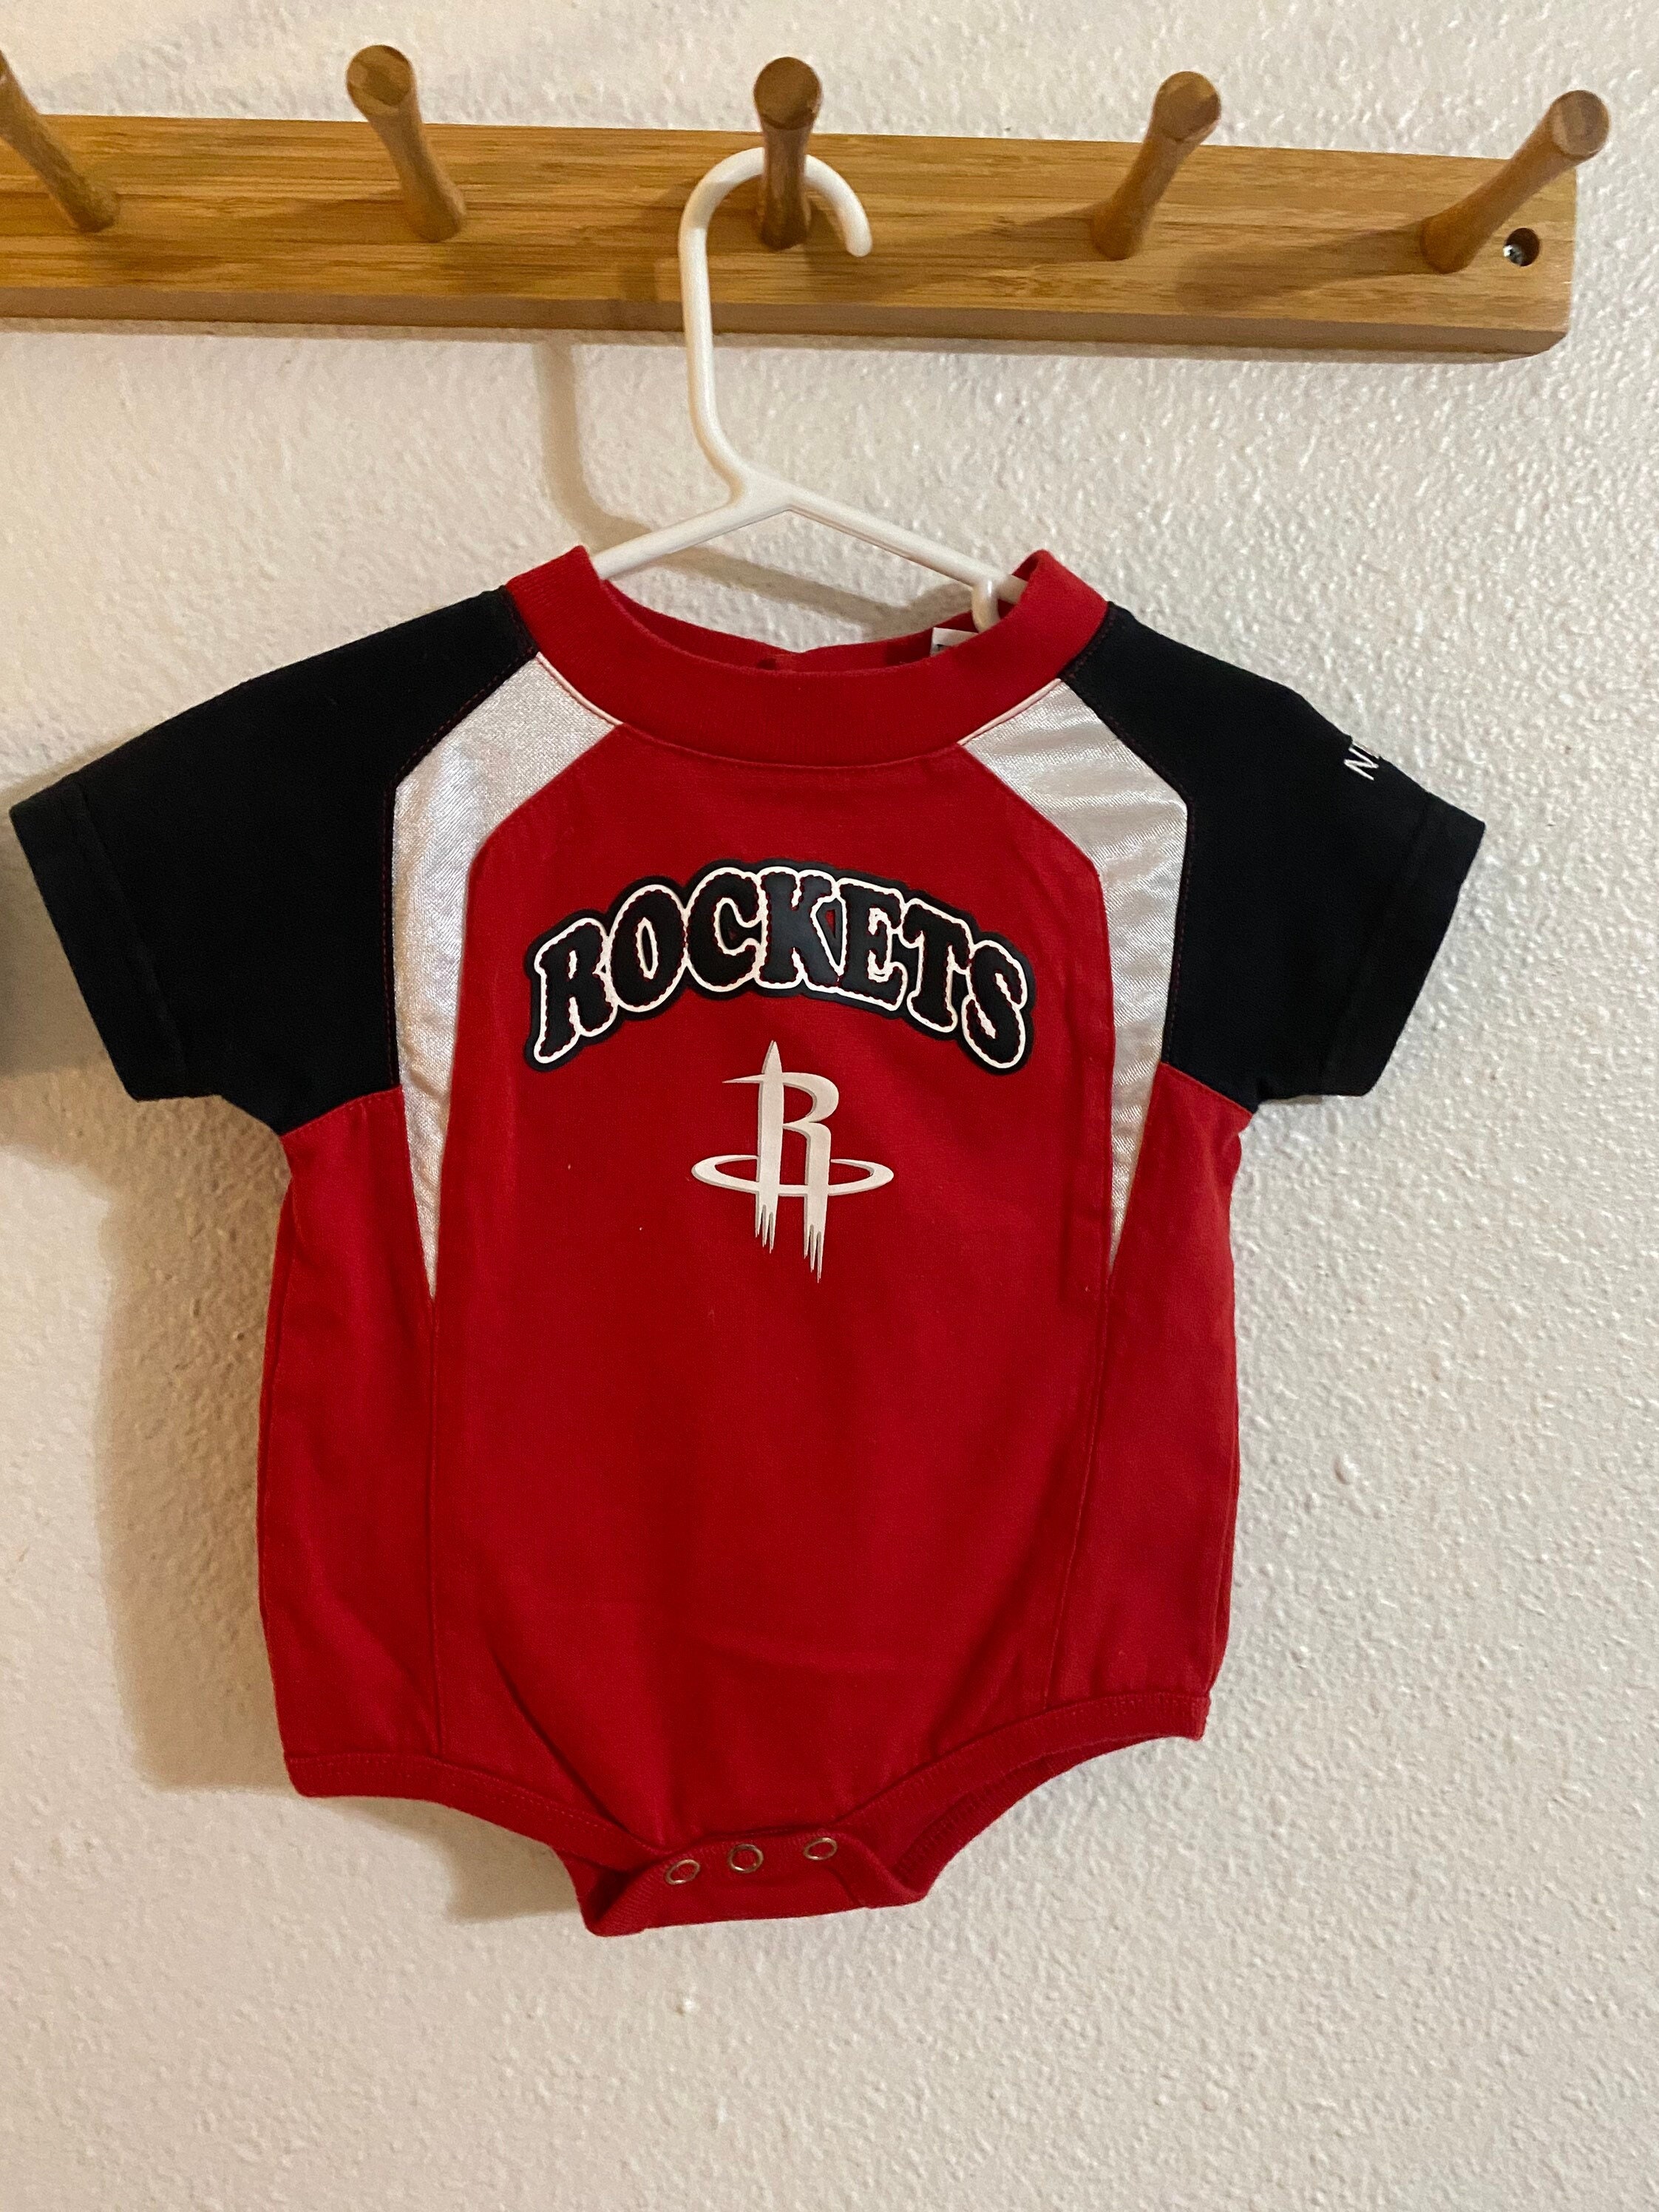 Houston Rockets Jersey For Babies, Youth, Women, or Men